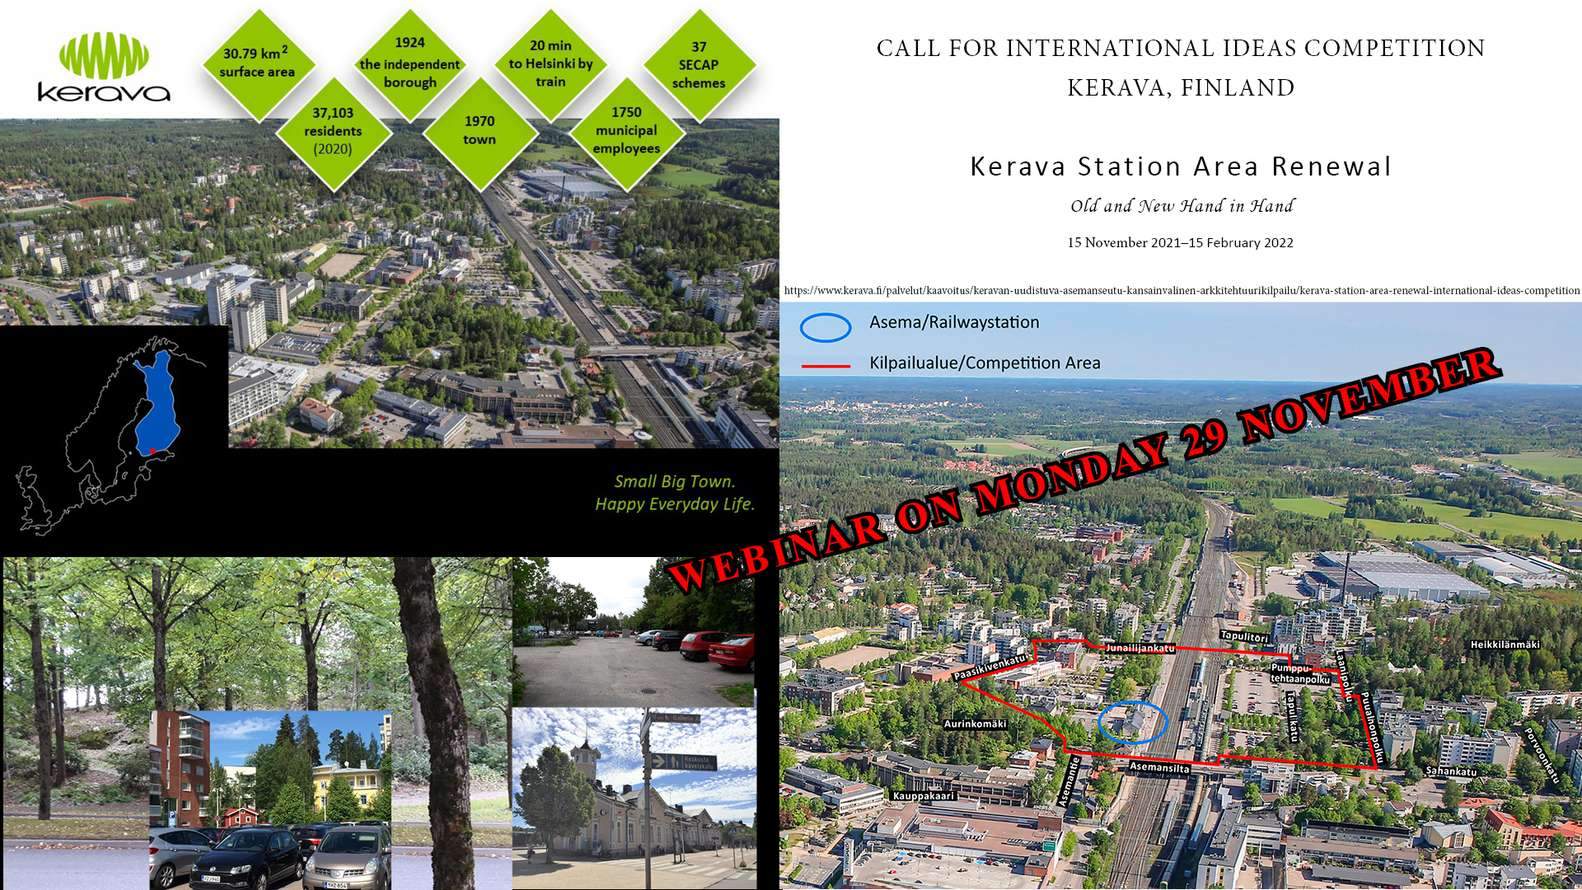 OPEN CALL FOR ENTRIES : Kerava Station Area Renewal - Oldn and New Hand in Hand - International Ideas Competition | دعوة مفتوحة للمشاركة: تجديد منطقة محطة كيرافا - يدا بيد قديمة وحديثة - مسابقة الأفكار الدولية